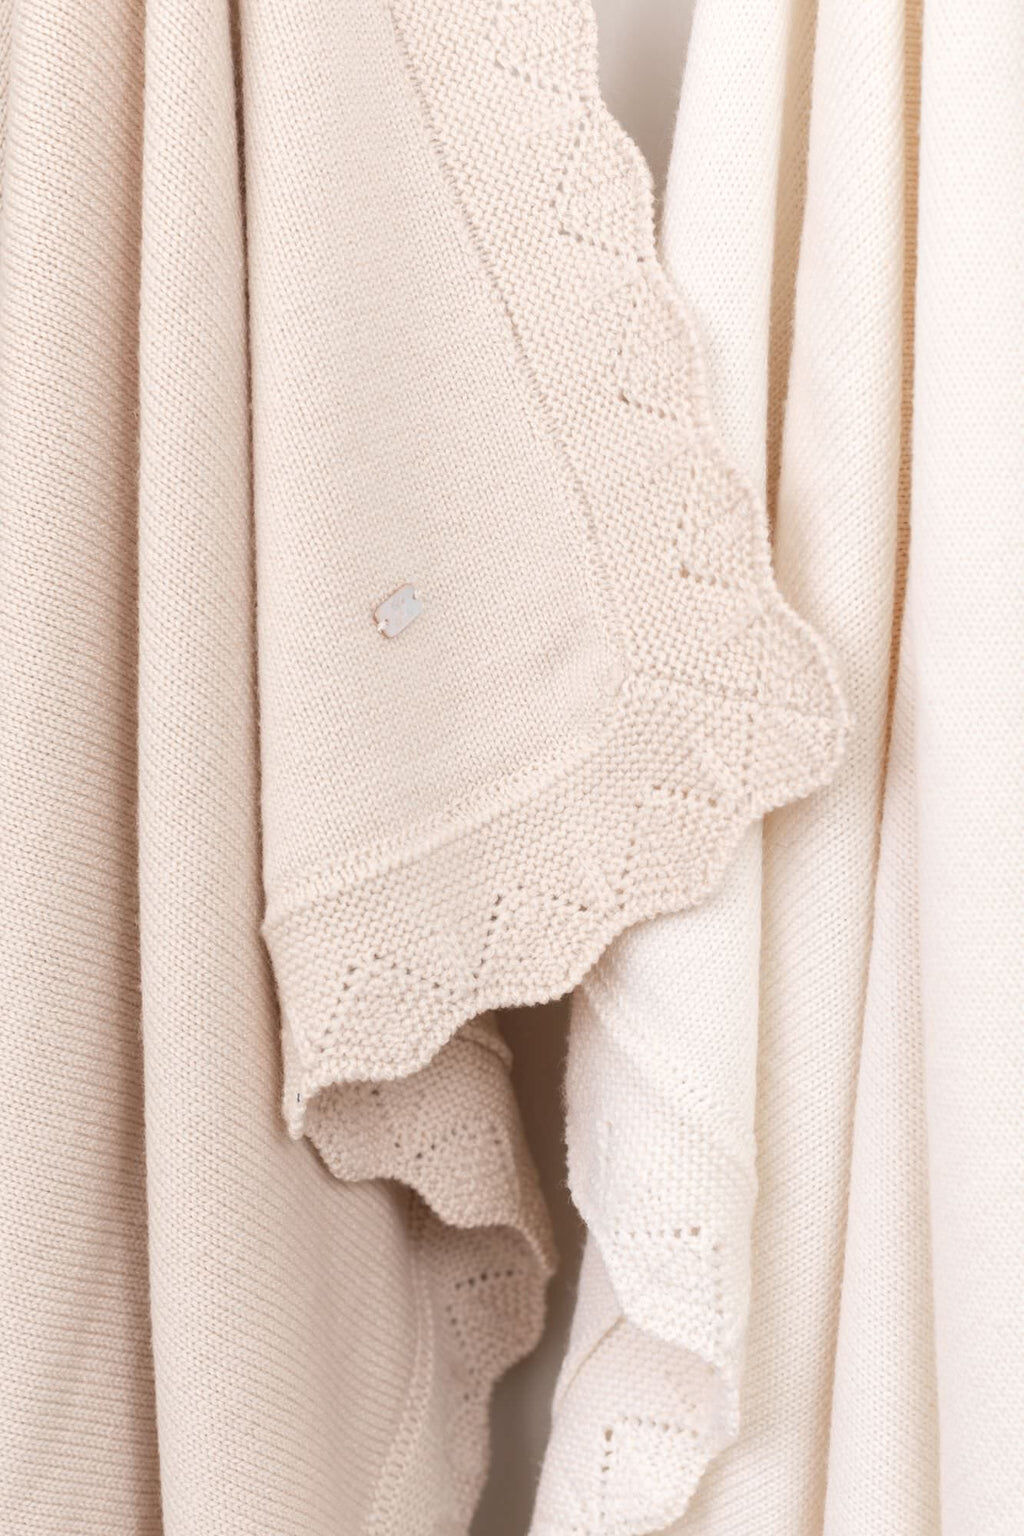 Blanket Wool - Merino Beige